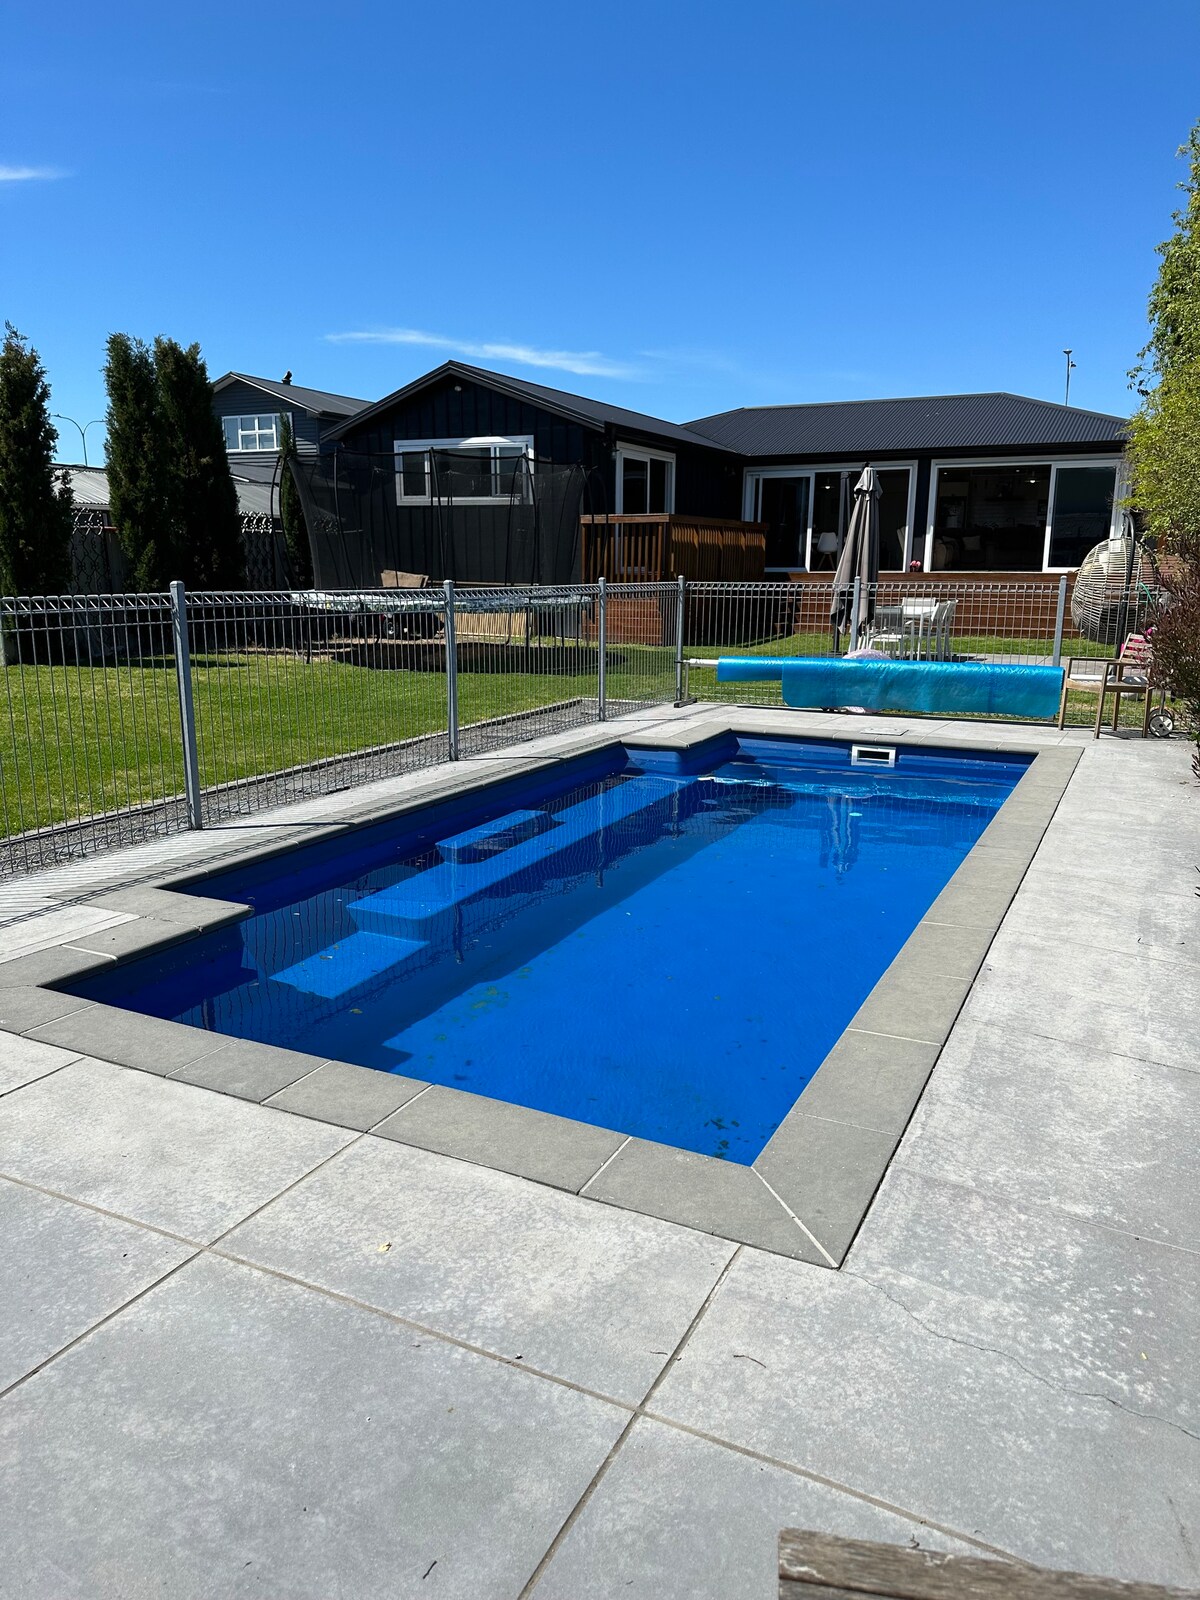 Beautiful home with pool - sleeps 15ppl